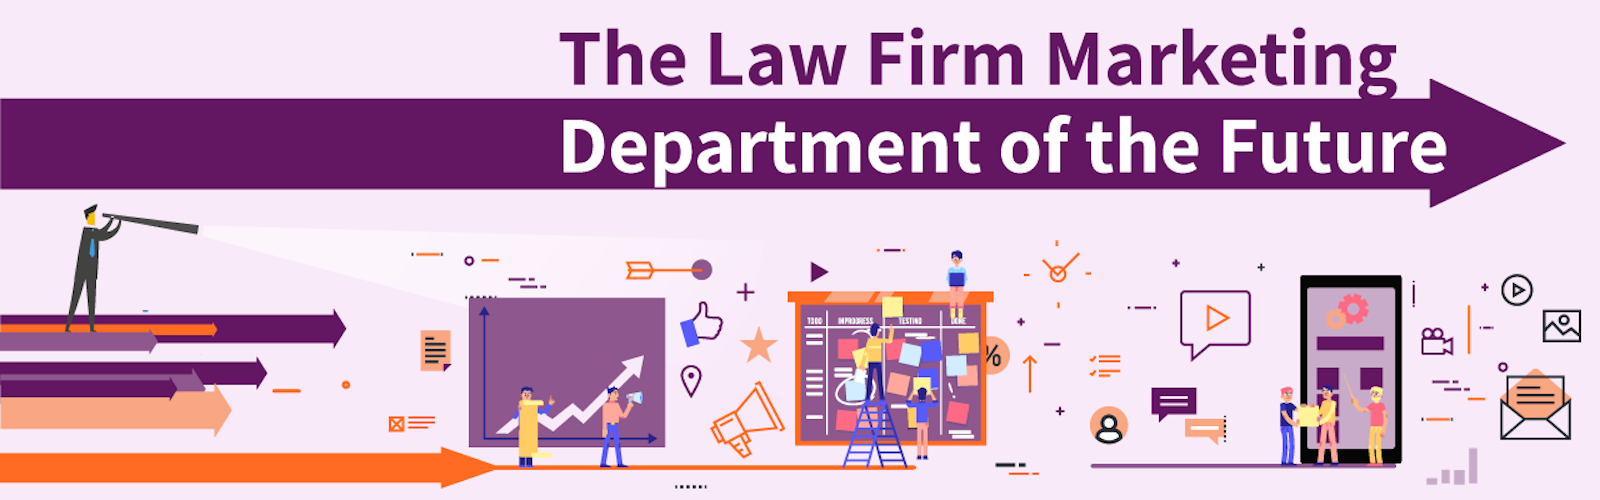 Law_Marketing_Dept_Future-Webinar-Banner